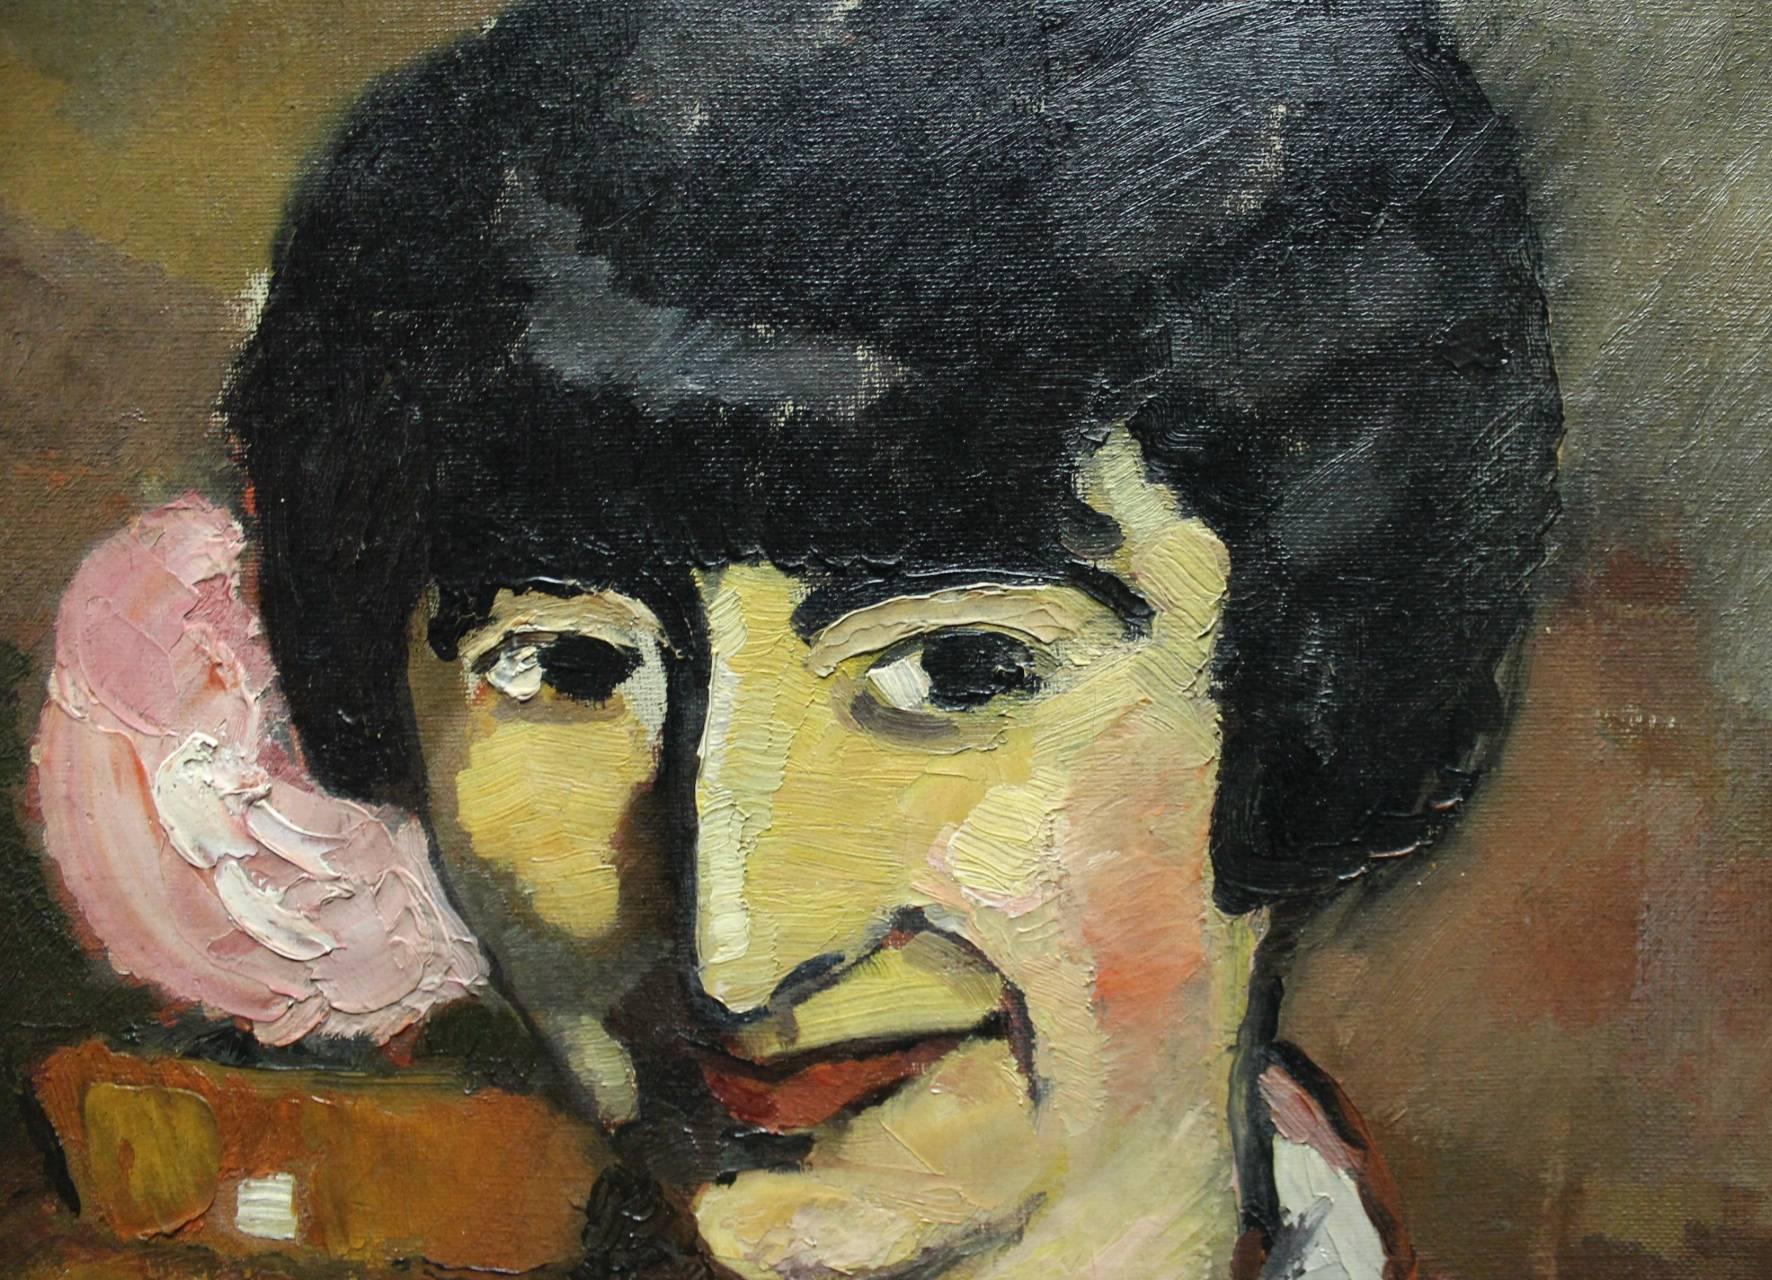  Alice B. Toklas, 1926 - Brown Portrait Painting by Harald Zaki